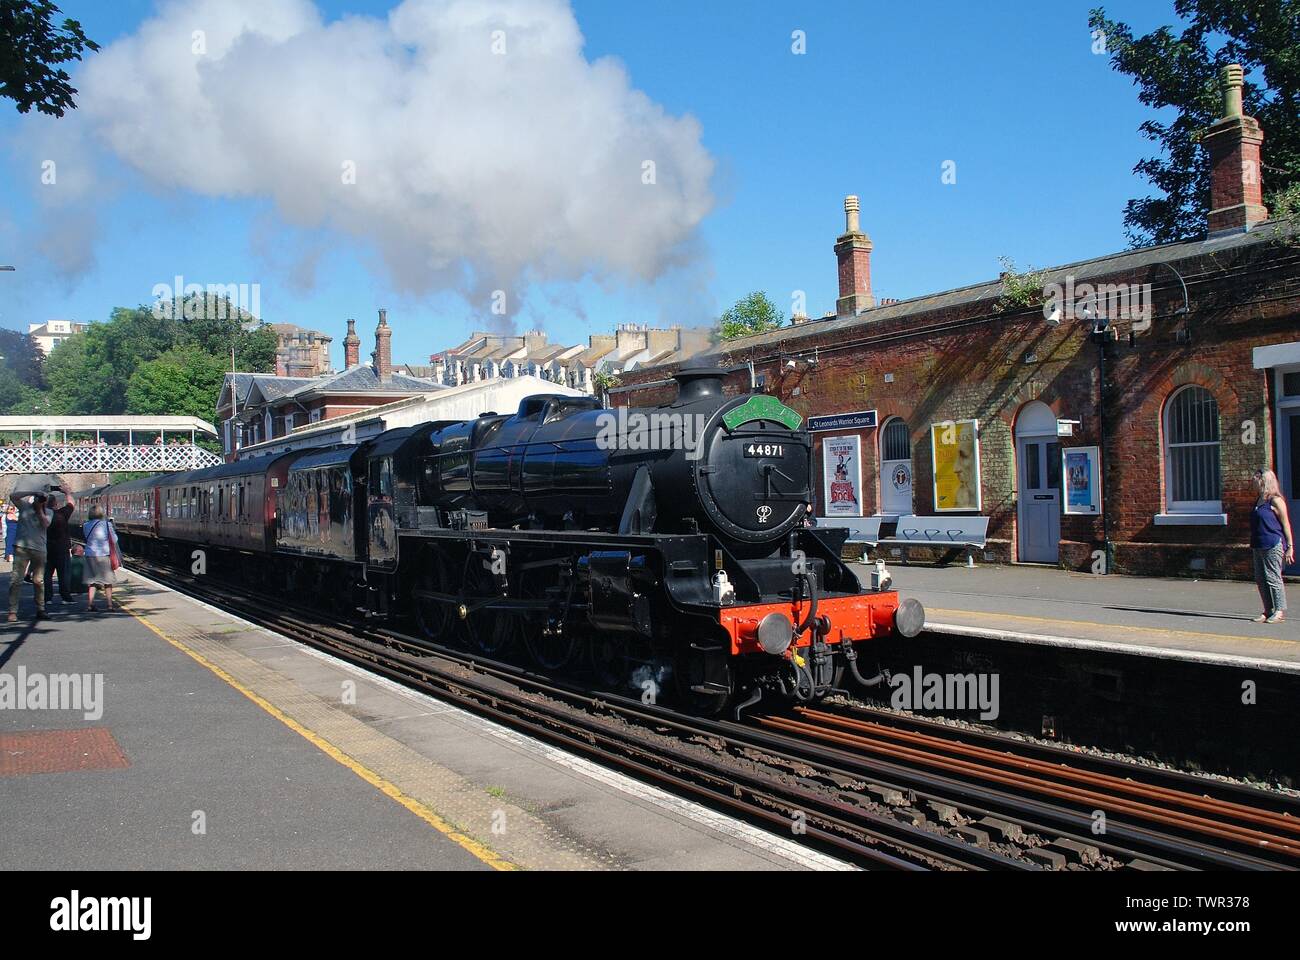 London Midland and Scottish Railway Class 5 locomotive, 44871, hauls an excursion train through St. Leonards Warrior Square station on June 22, 2019. Stock Photo